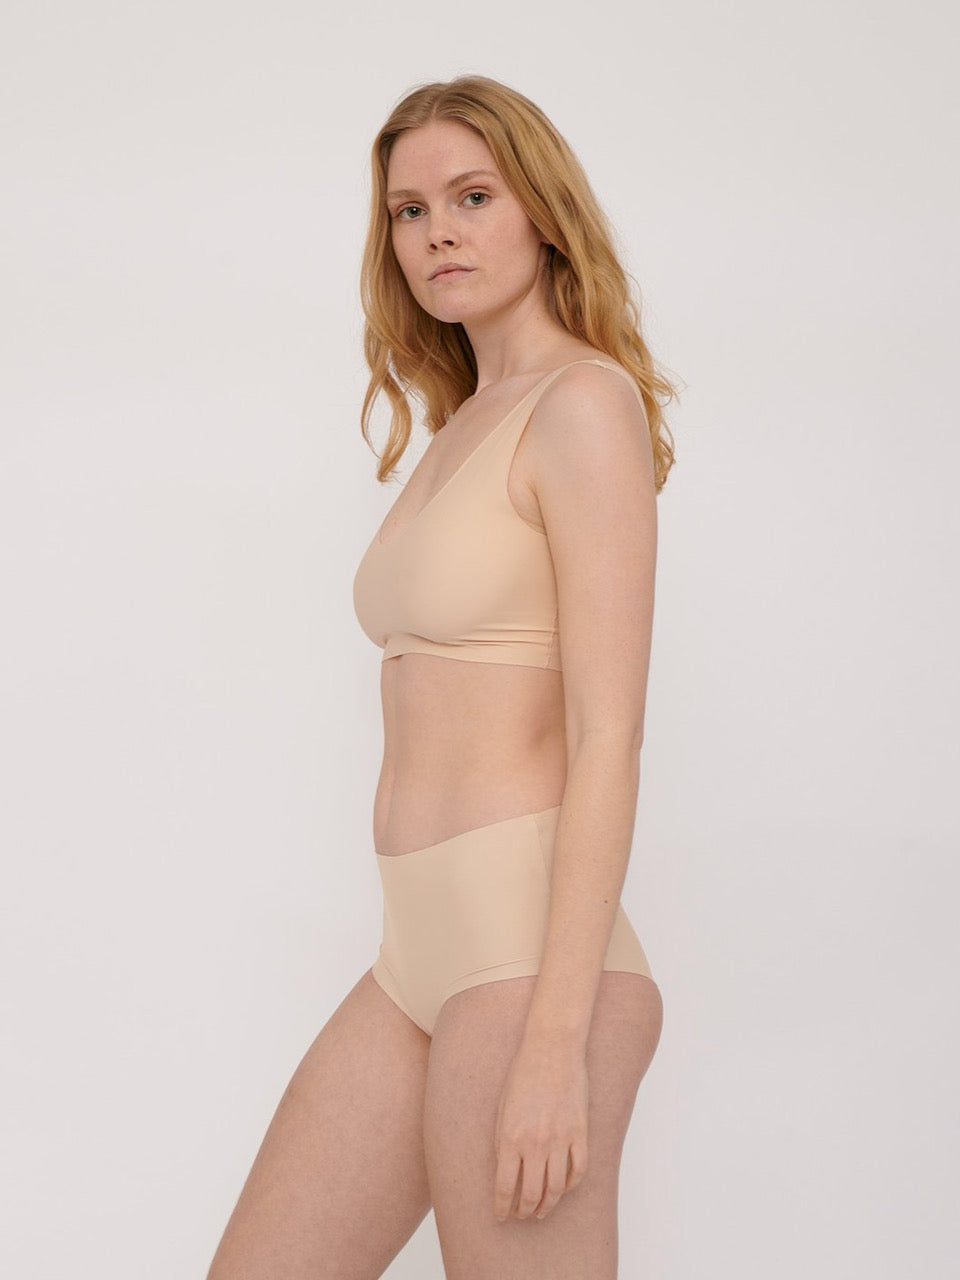 A woman wearing Organic Basics' Invisible Cheeky High-Rise Briefs (2-pack) – Oak bikini top and panties.